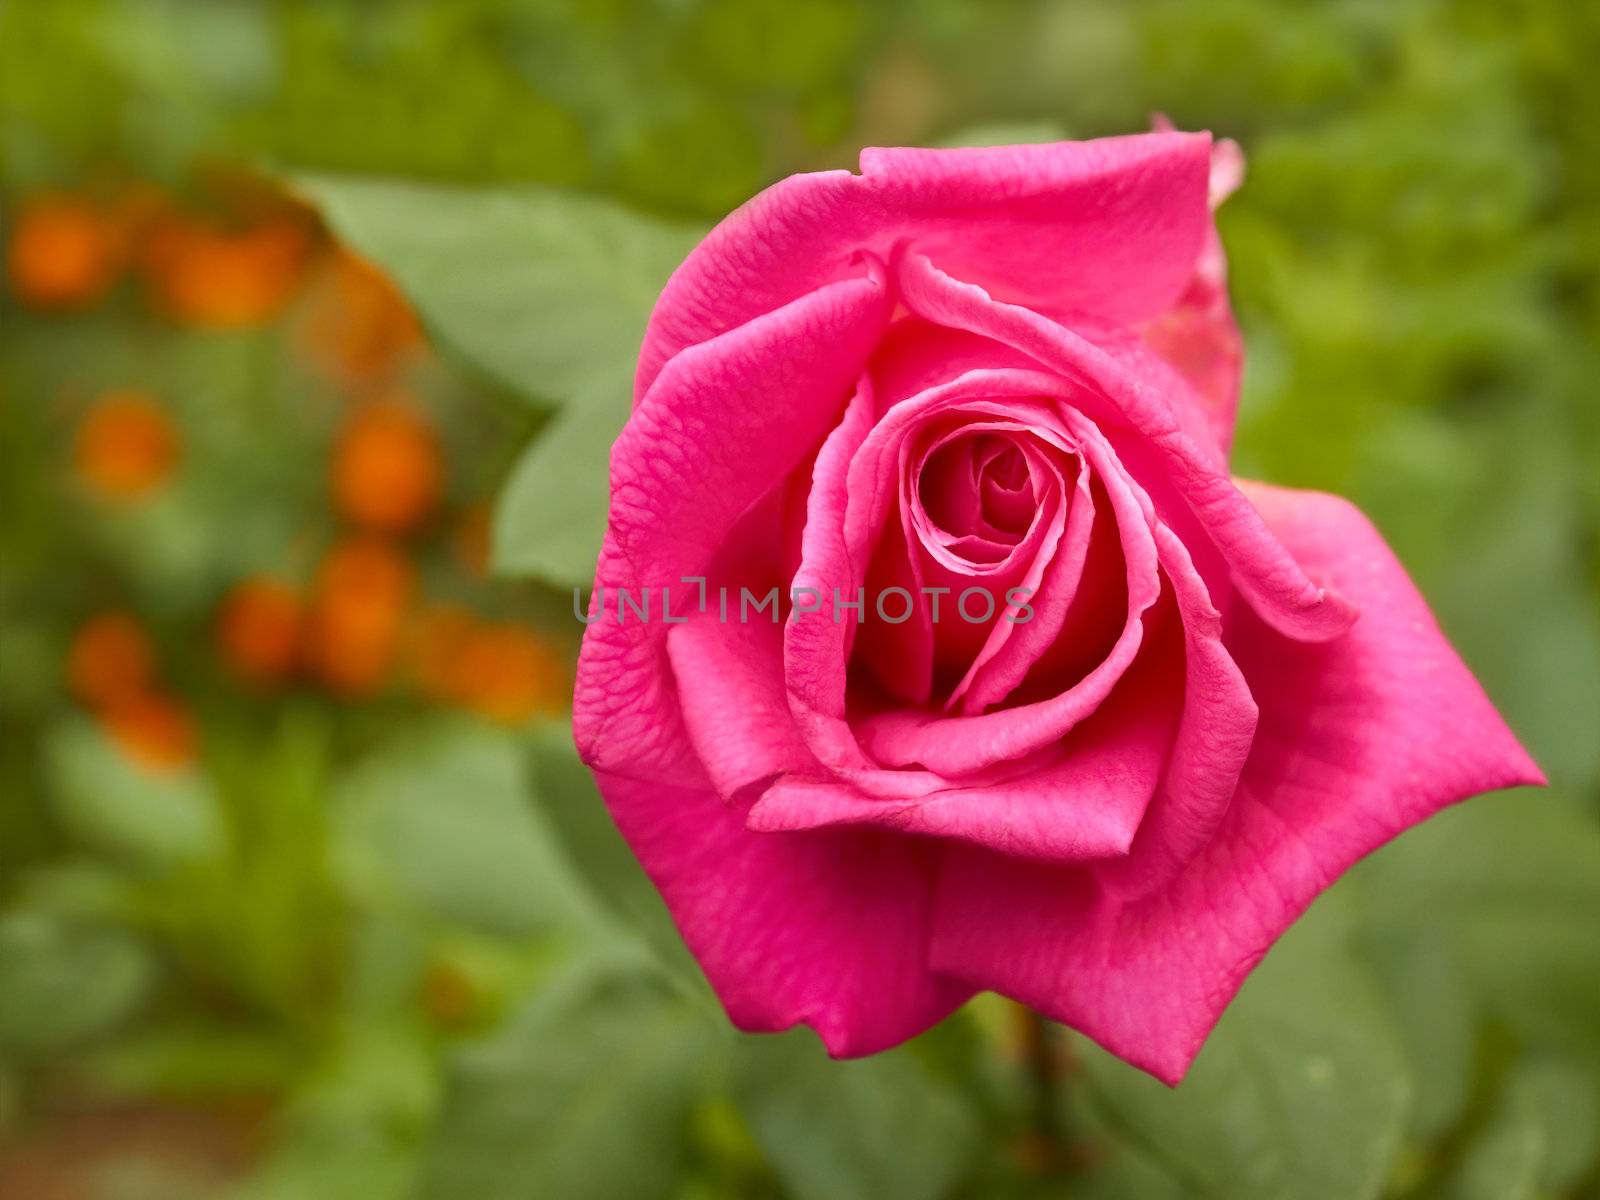 Bright pink rose in flowerbed by qiiip